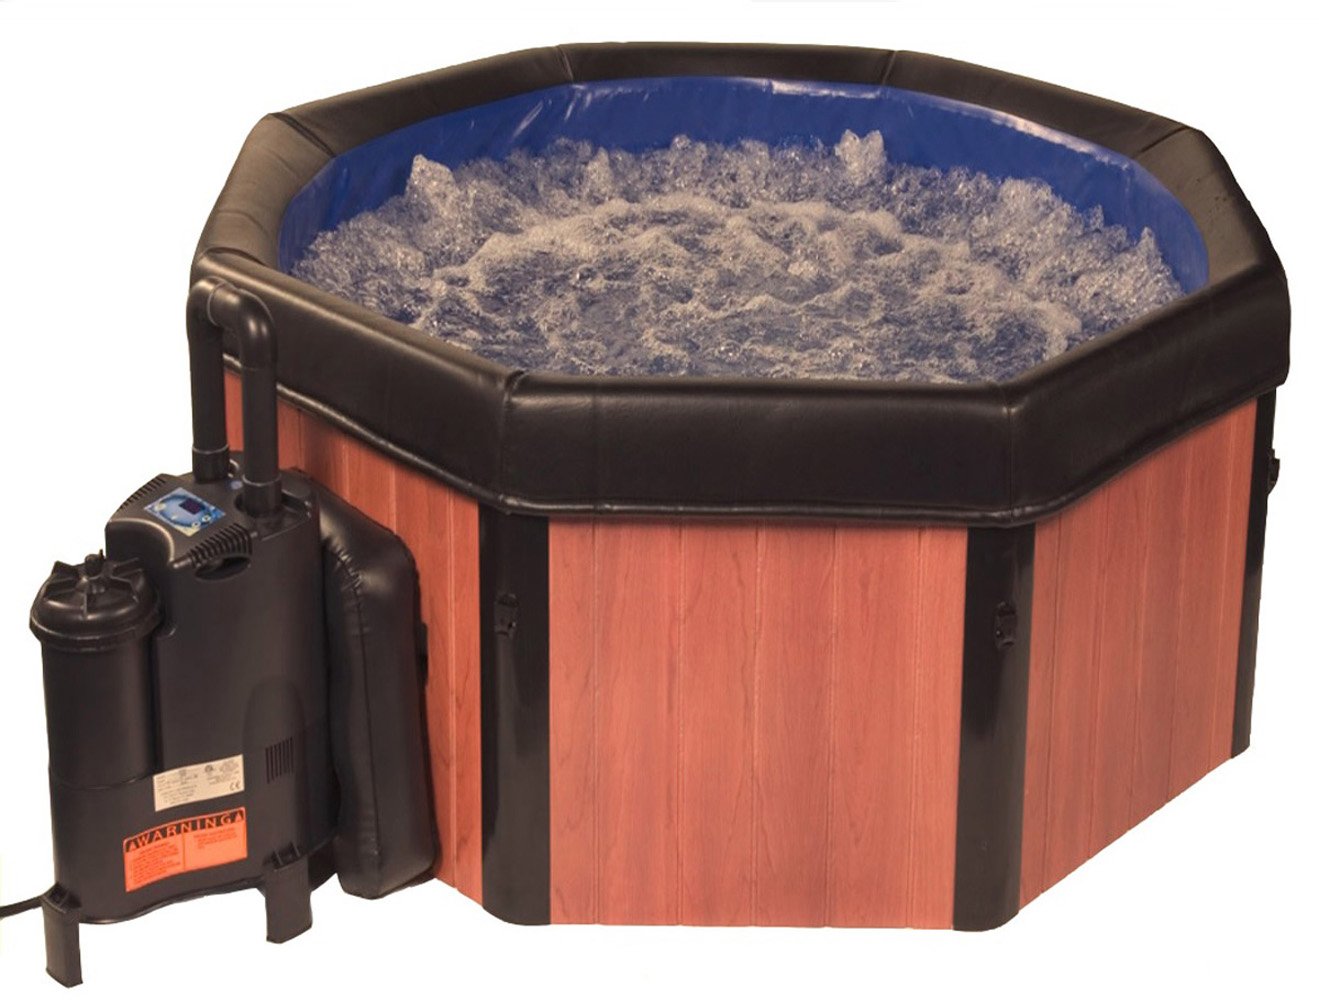 U-max Inflatable Hot Tub Manual